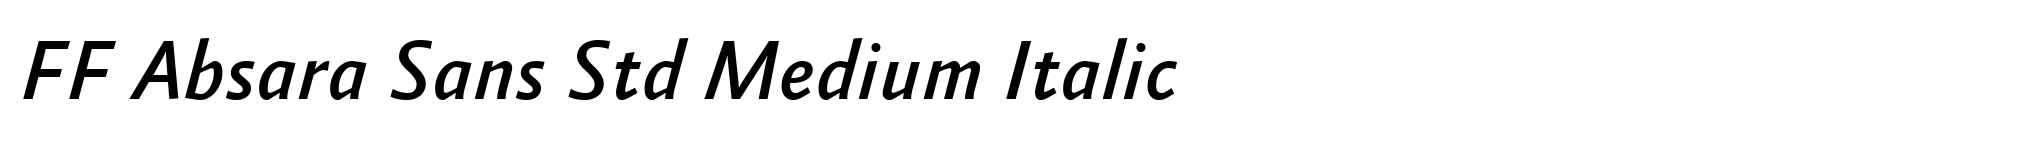 FF Absara Sans Std Medium Italic image